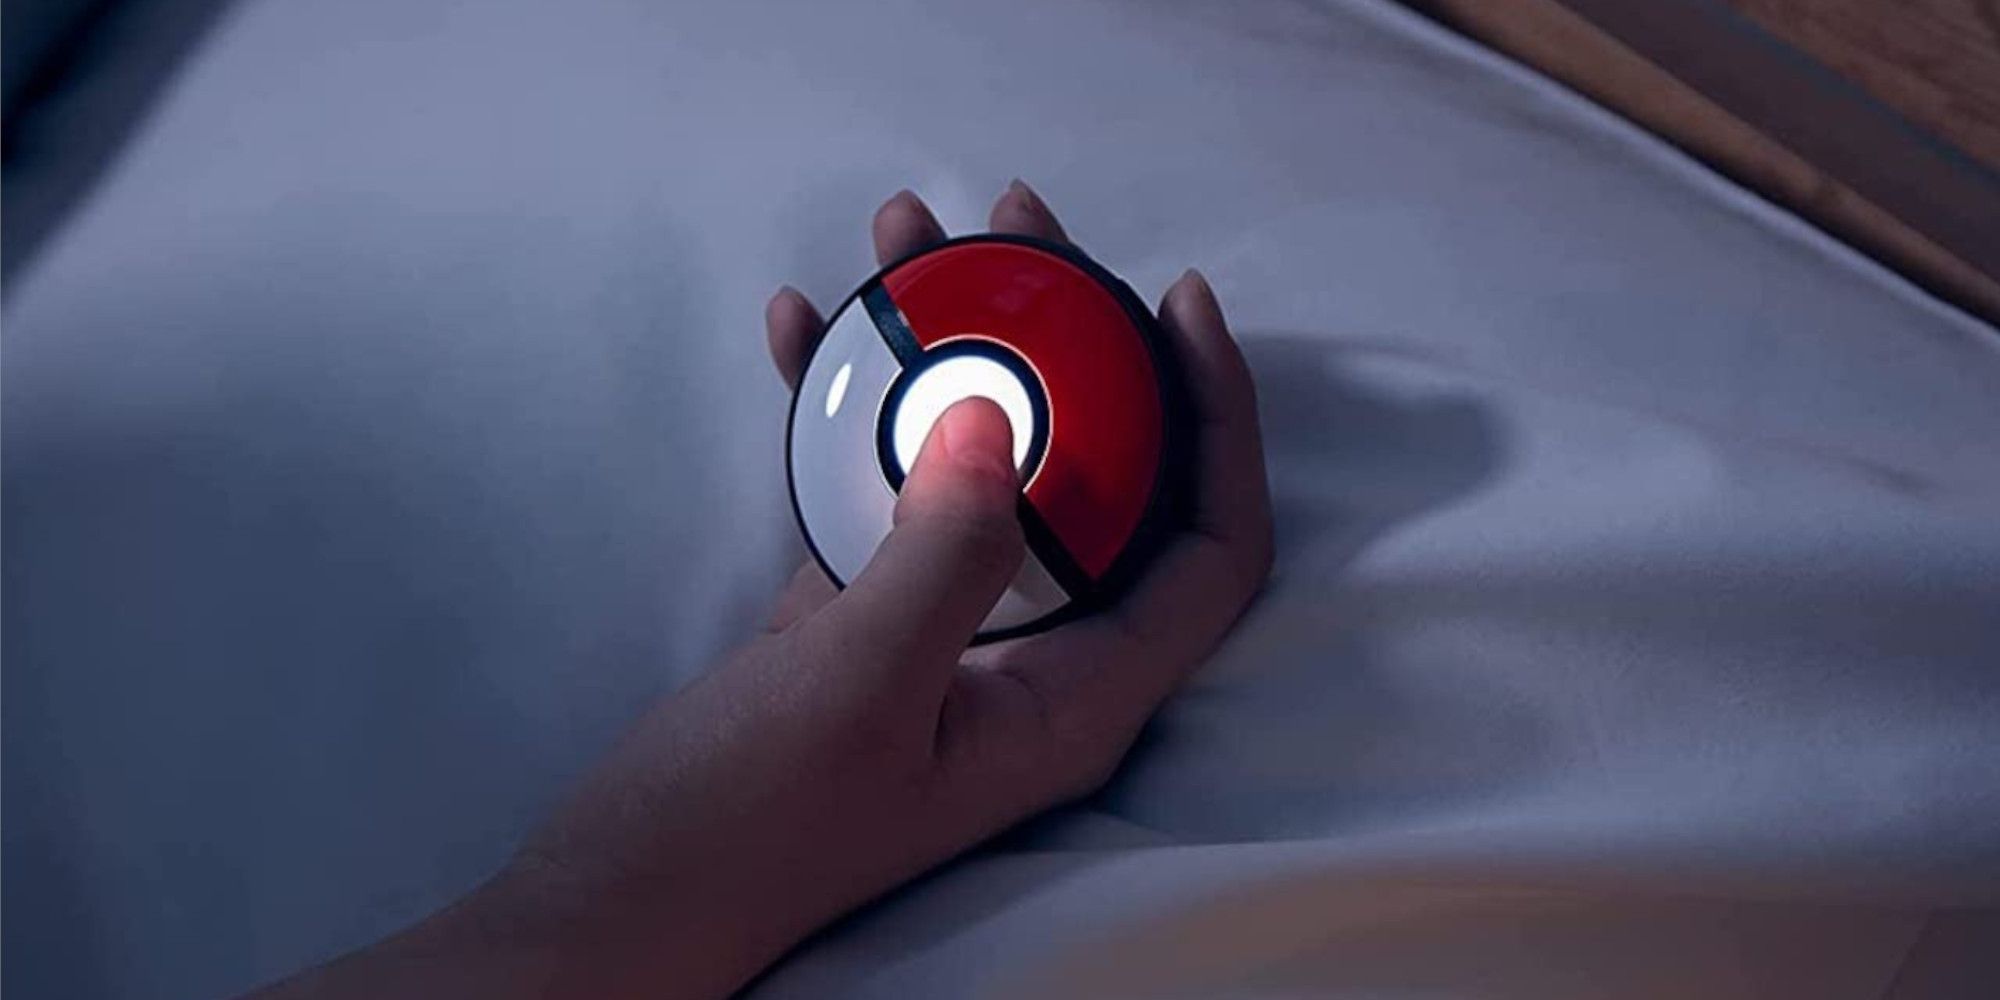 Modded Pokémon GO Plus With On/off Switch for Auto-throw 